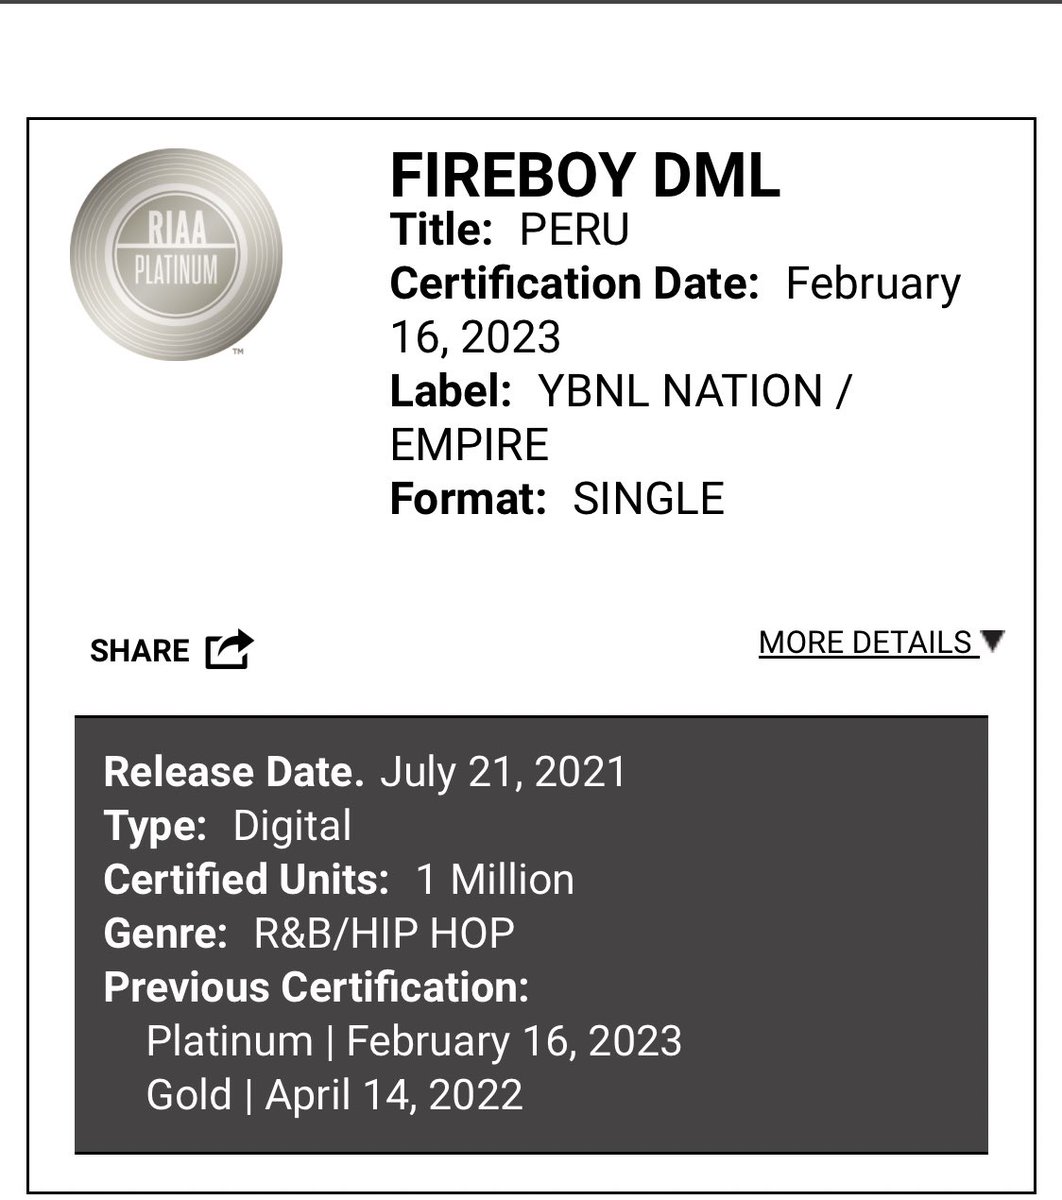 RT @advtomiwa: Fireboy’s “Peru” now certified platinum in the US https://t.co/CSXTSzDXo0